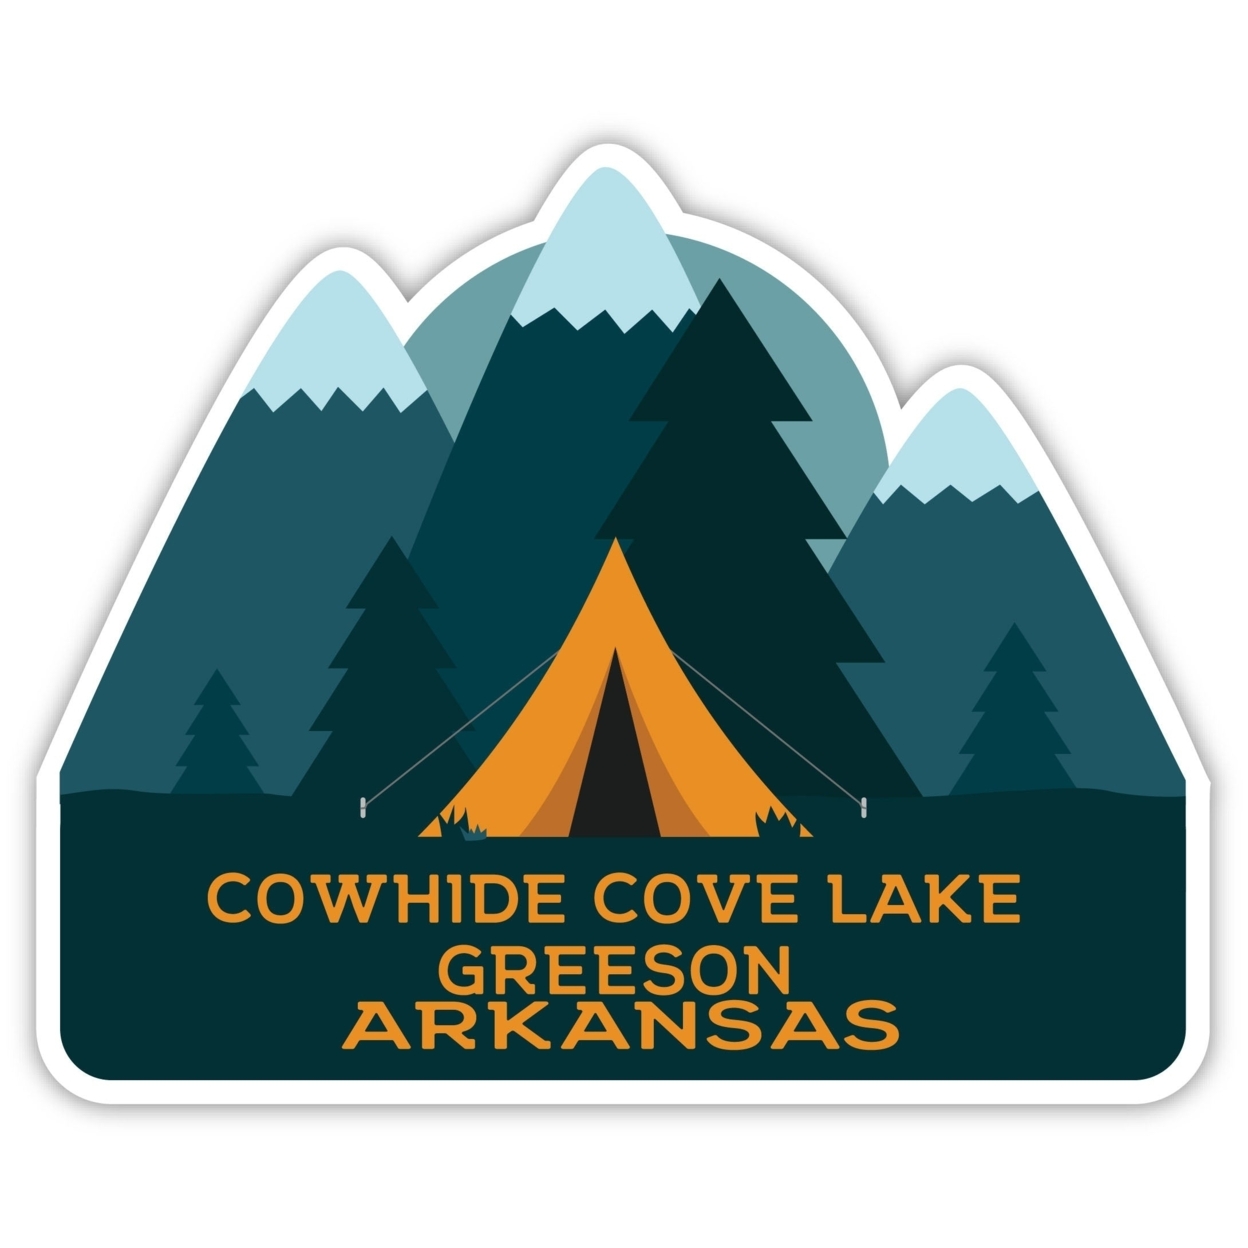 Cowhide Cove Lake Greeson Arkansas Souvenir Decorative Stickers (Choose Theme And Size) - Single Unit, 8-Inch, Tent